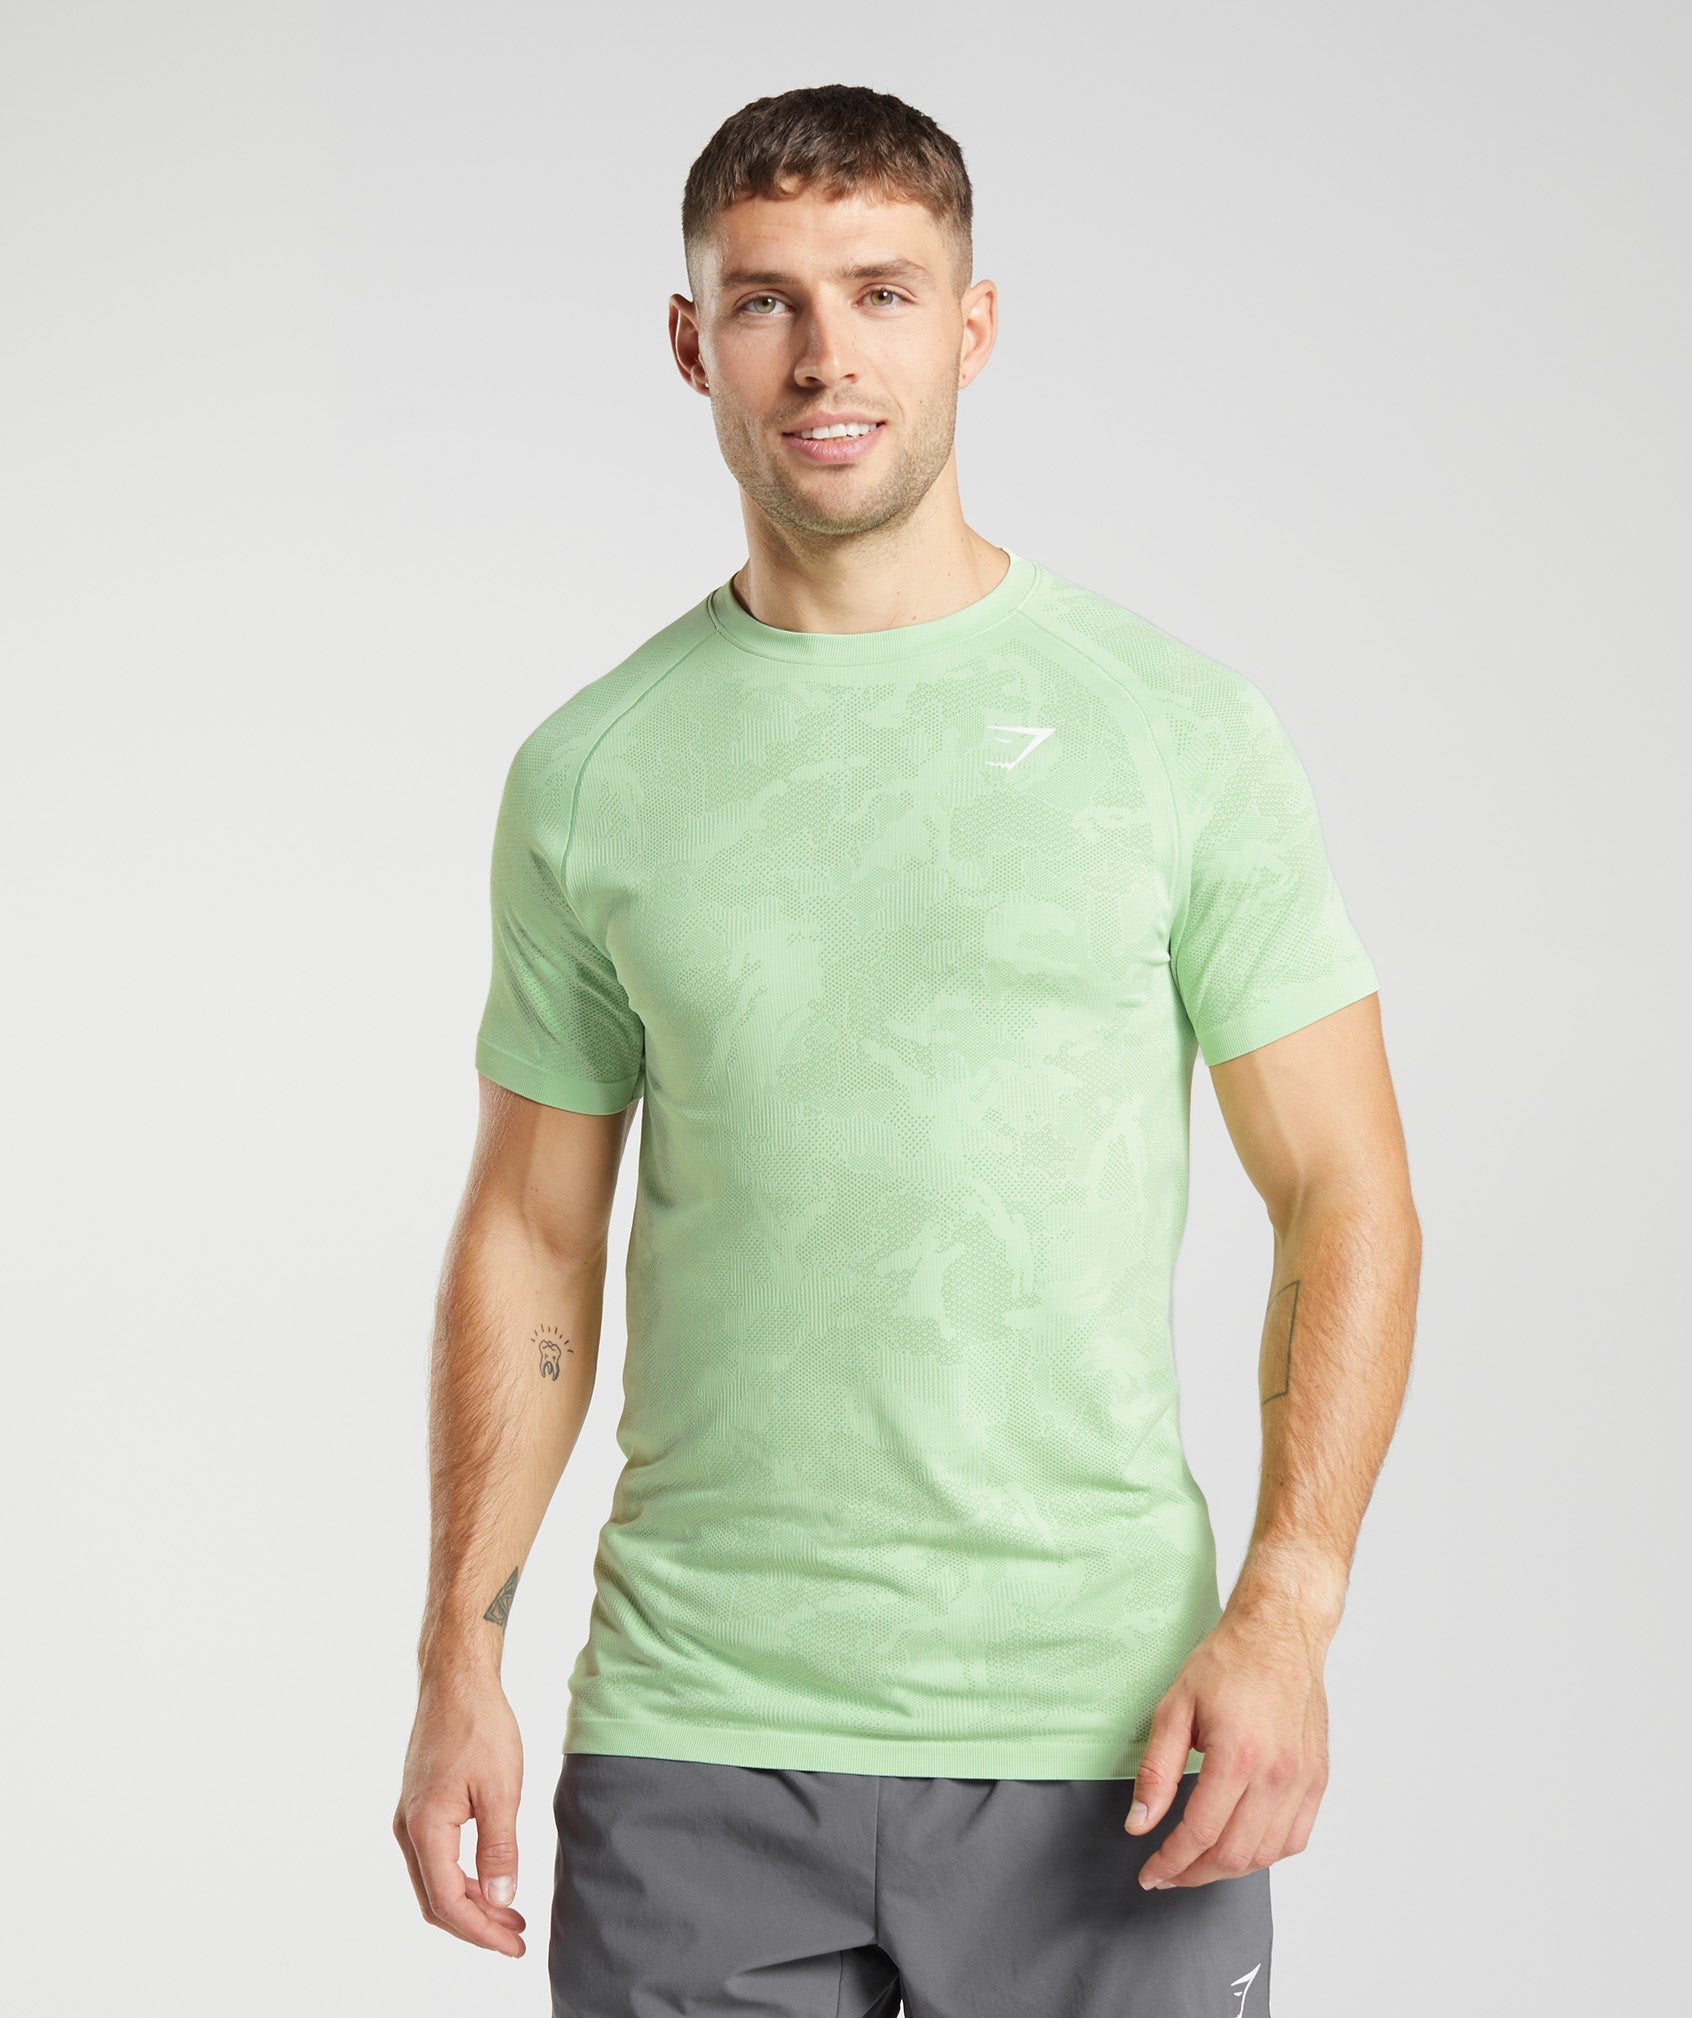 Gymshark Geo Seamless T-Shirt - Off White/Light Grey